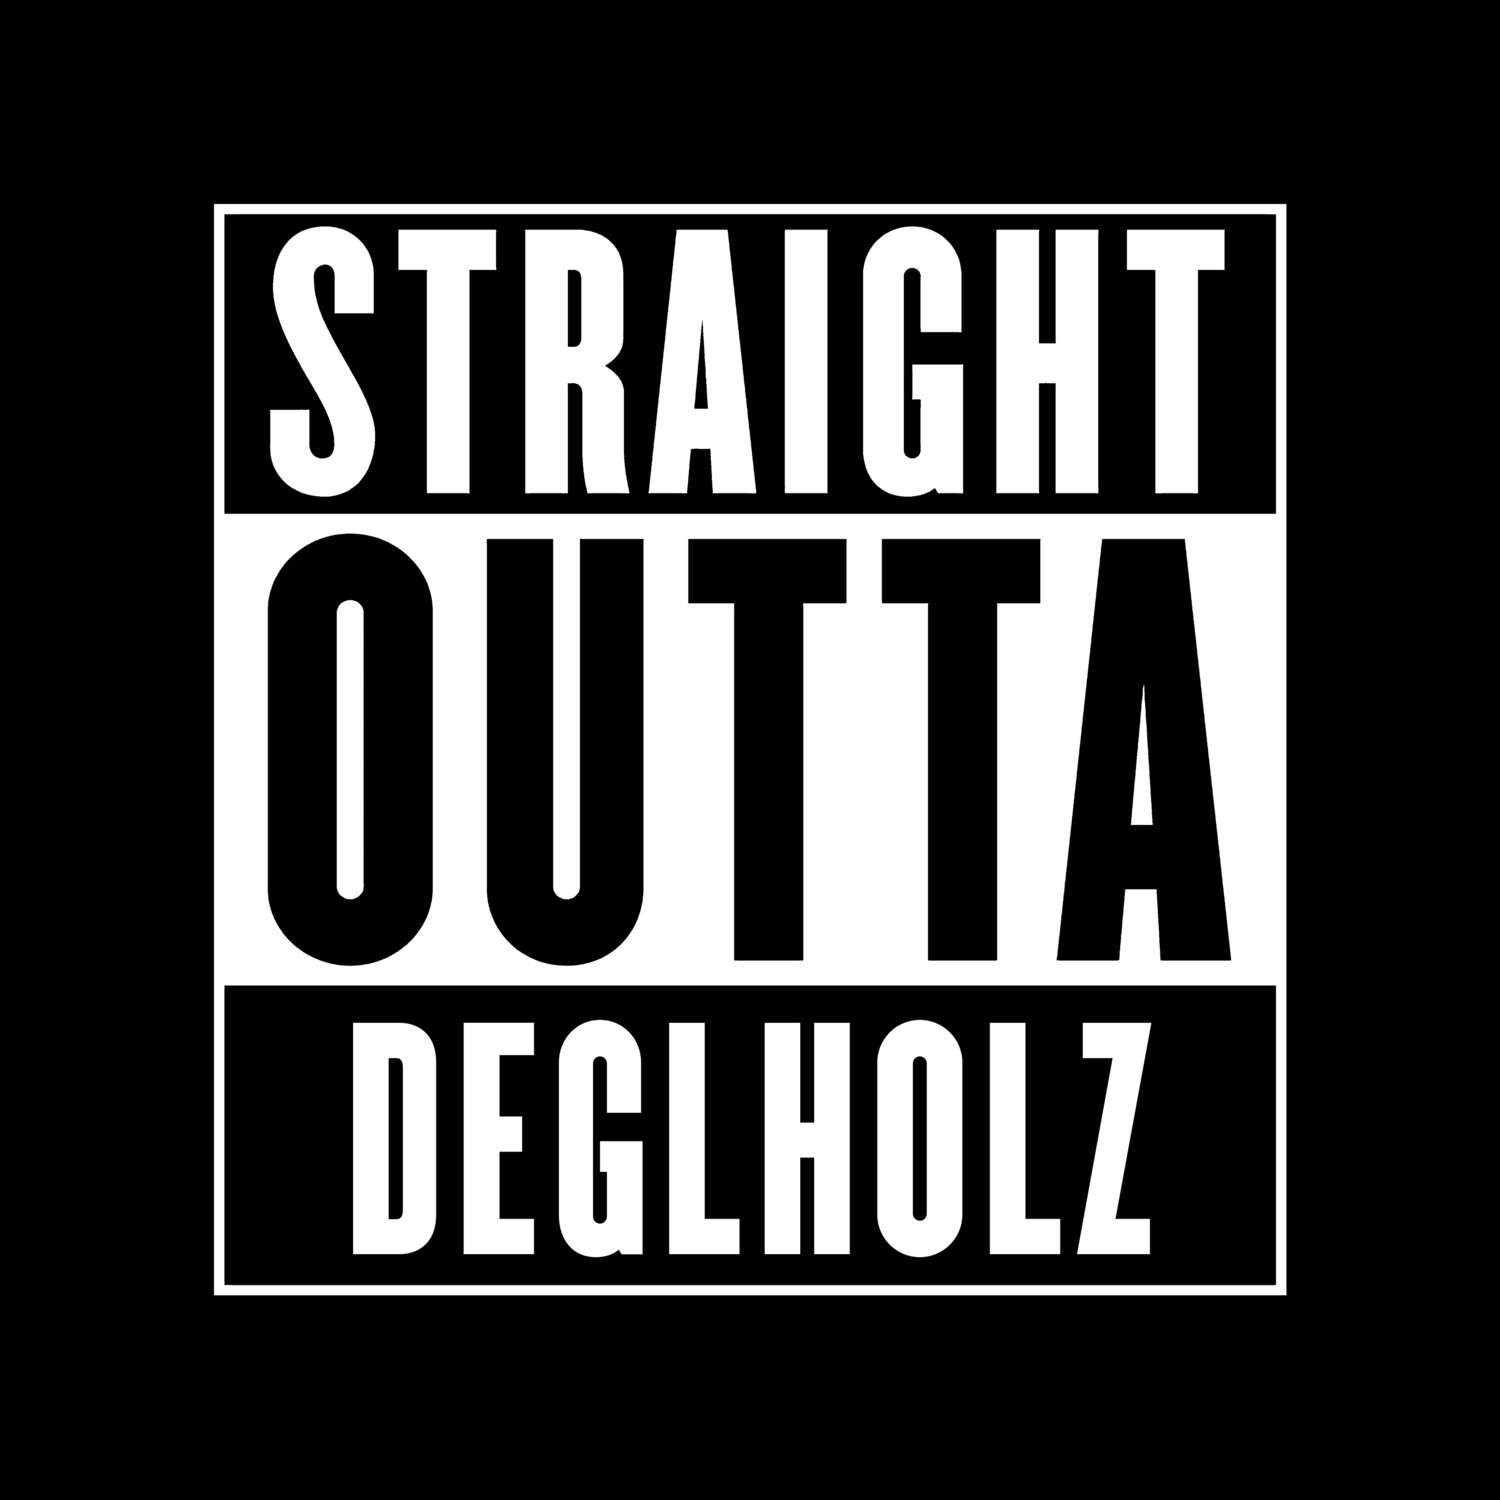 Deglholz T-Shirt »Straight Outta«